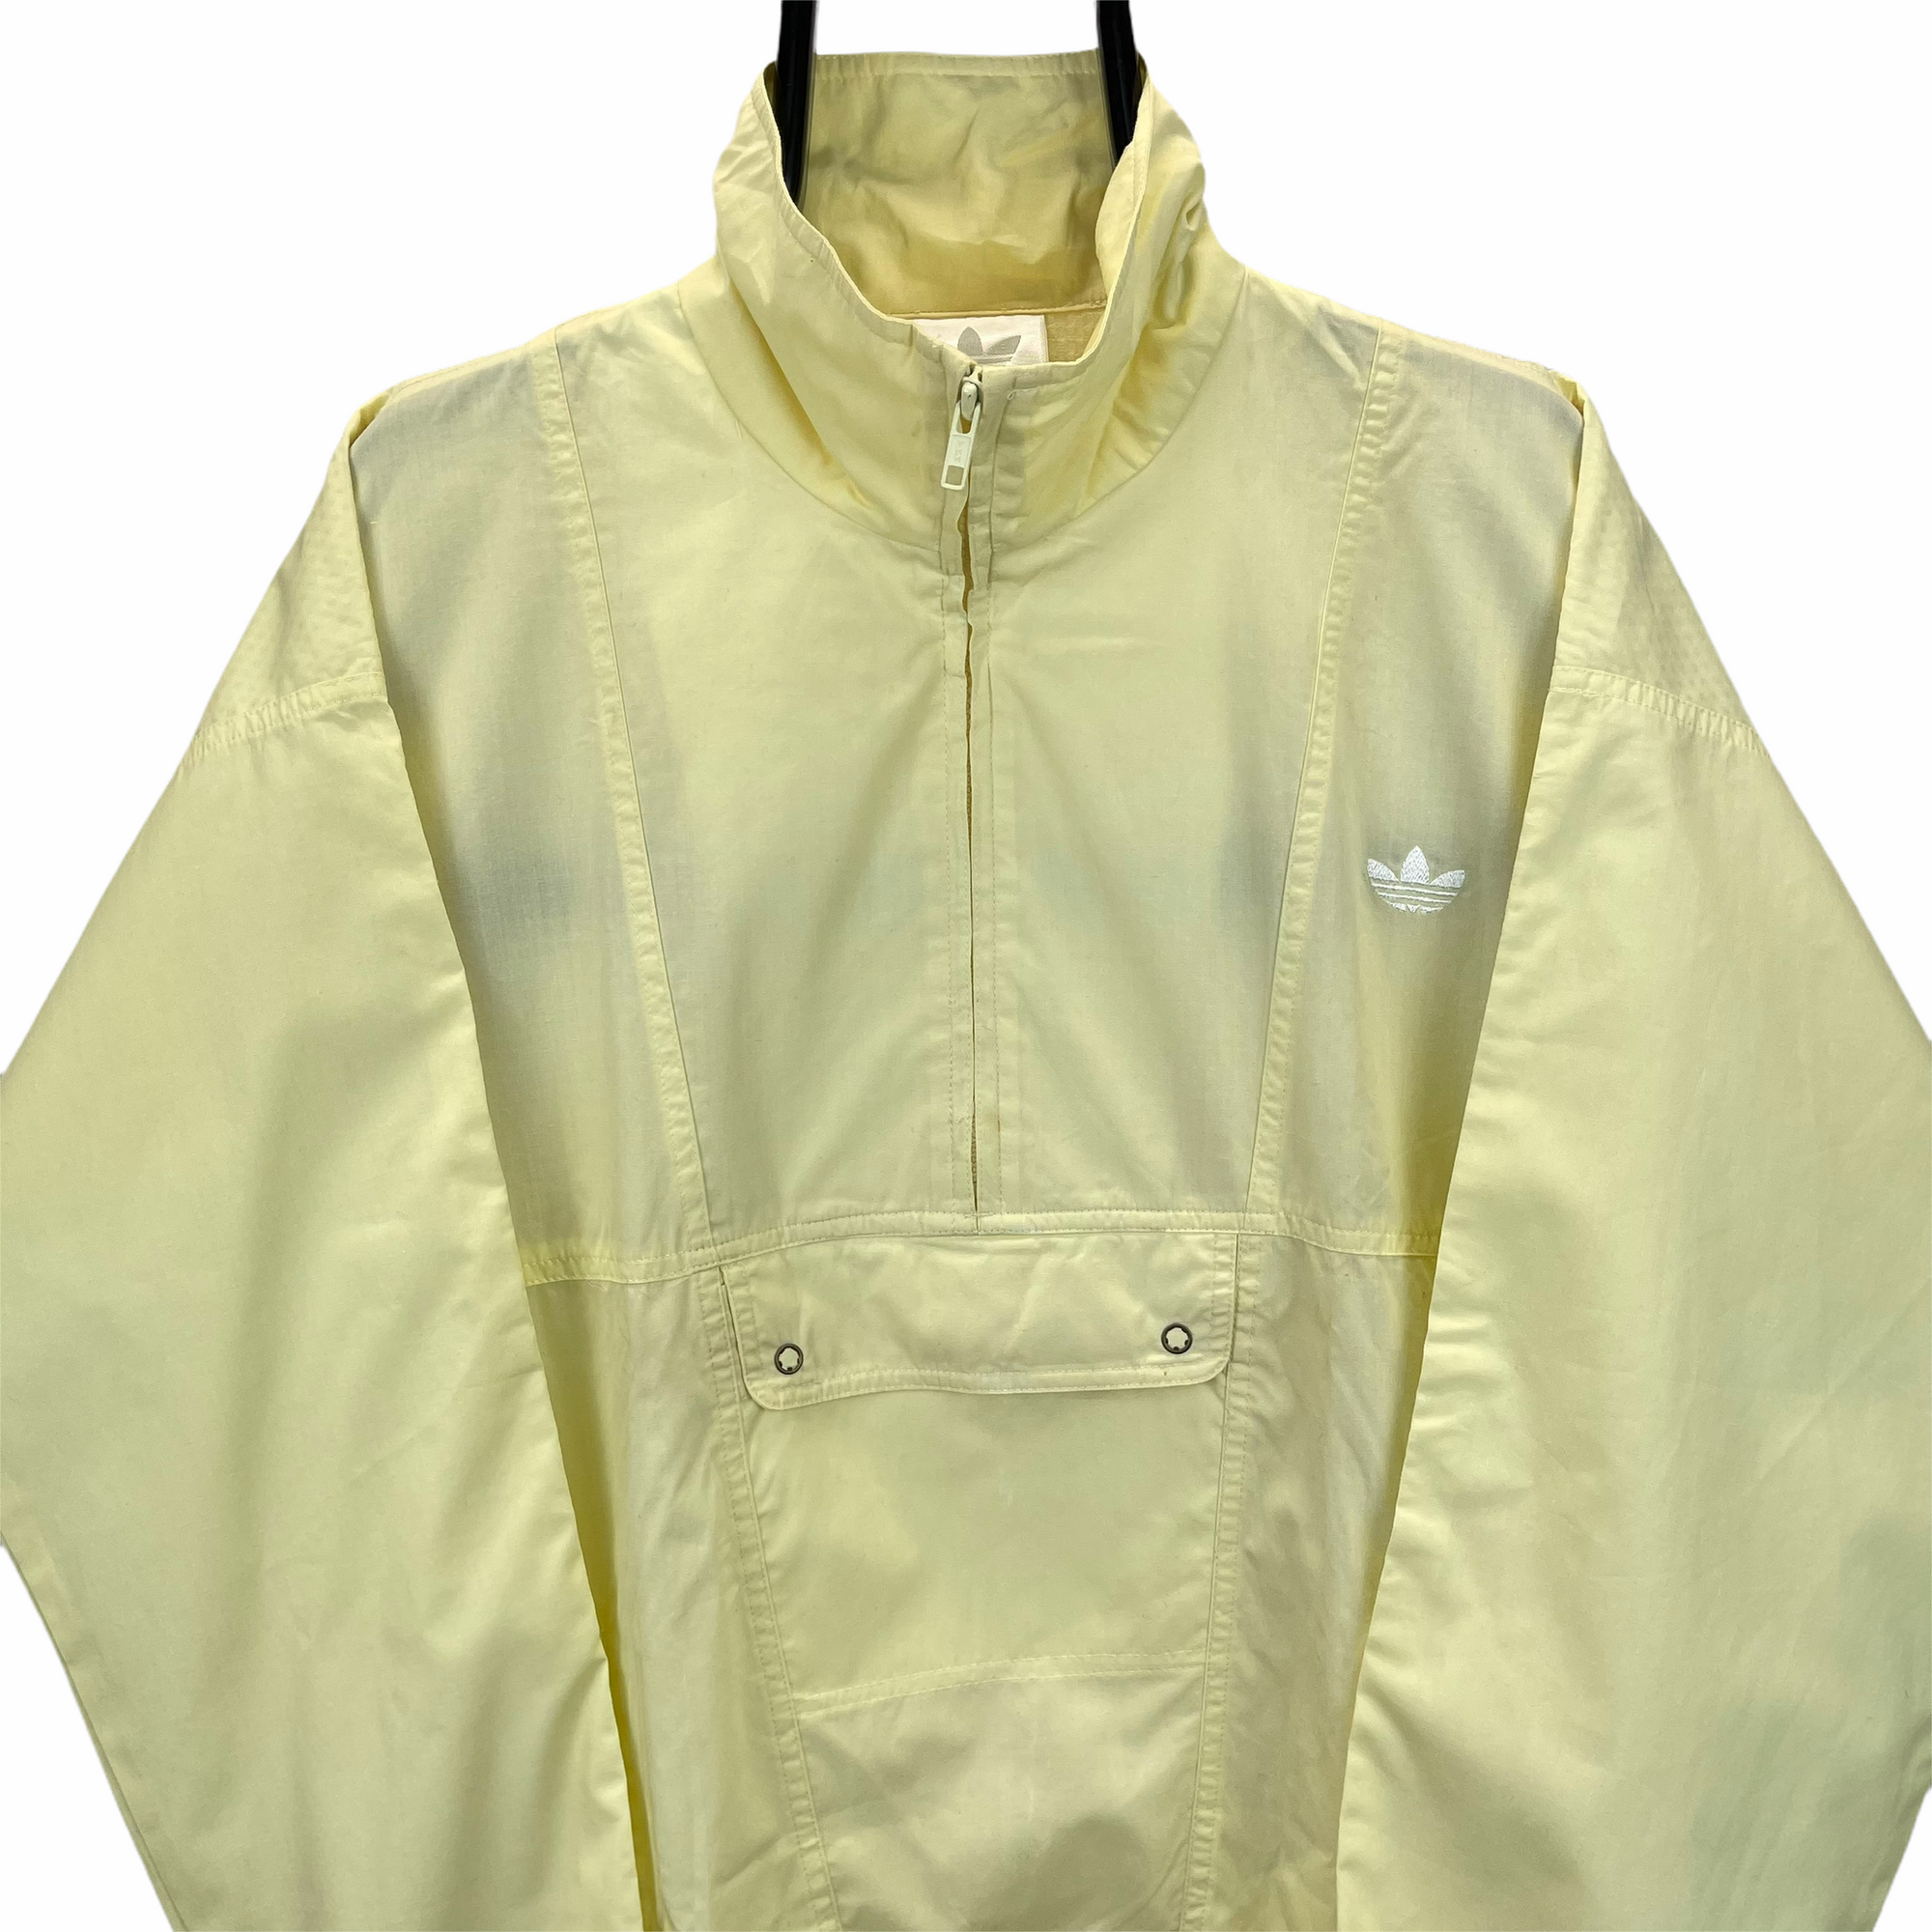 Vintage 90s Adidas Half Zip Track Jacket in Lemon Yellow - Men's Medium/Women's Large